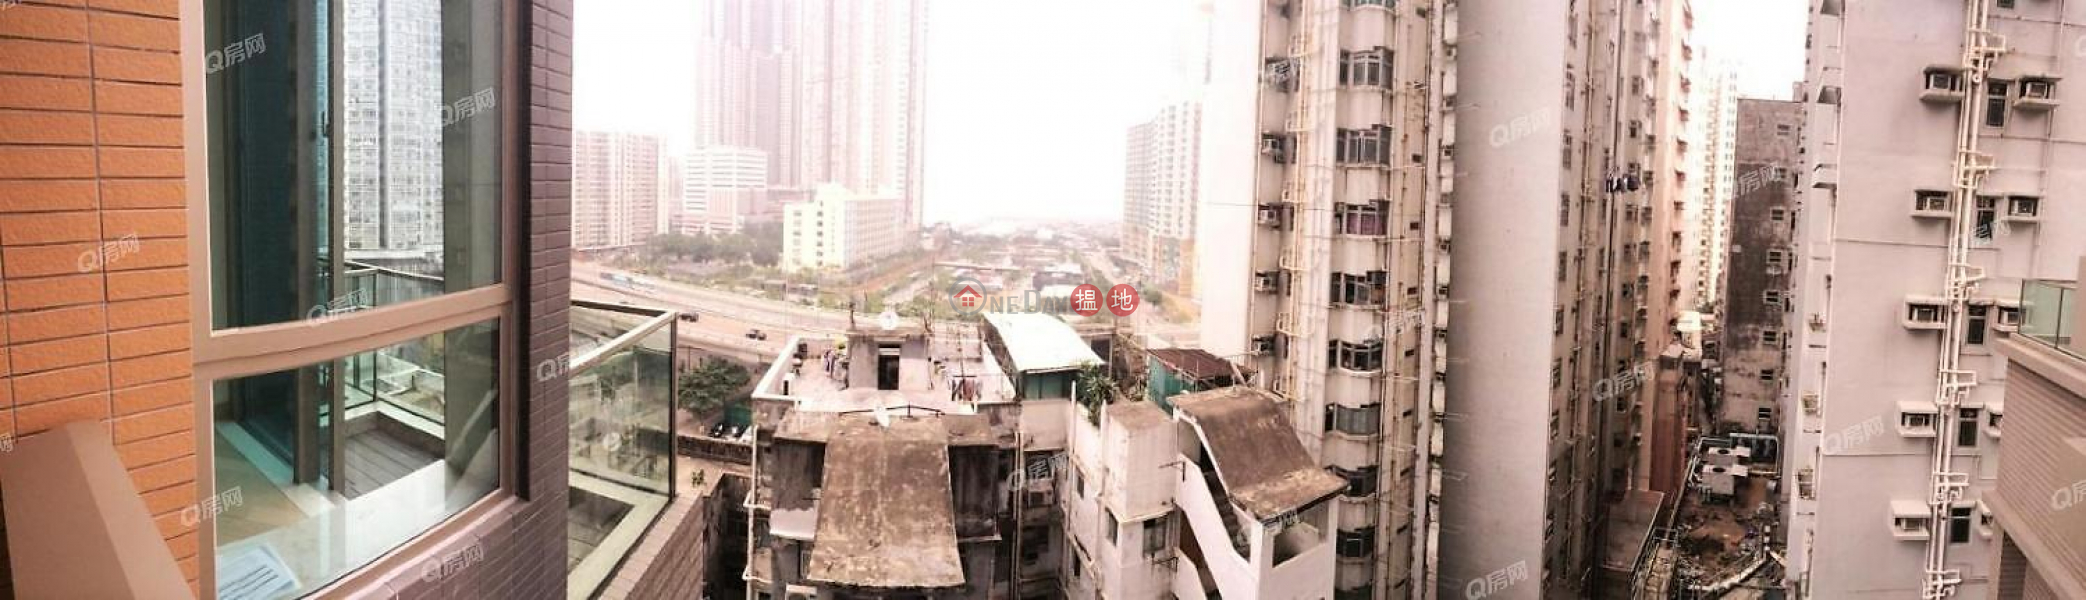 I‧Uniq Grand | 2 bedroom Low Floor Flat for Sale | 157 Shau Kei Wan Road | Eastern District Hong Kong Sales, HK$ 6.8M